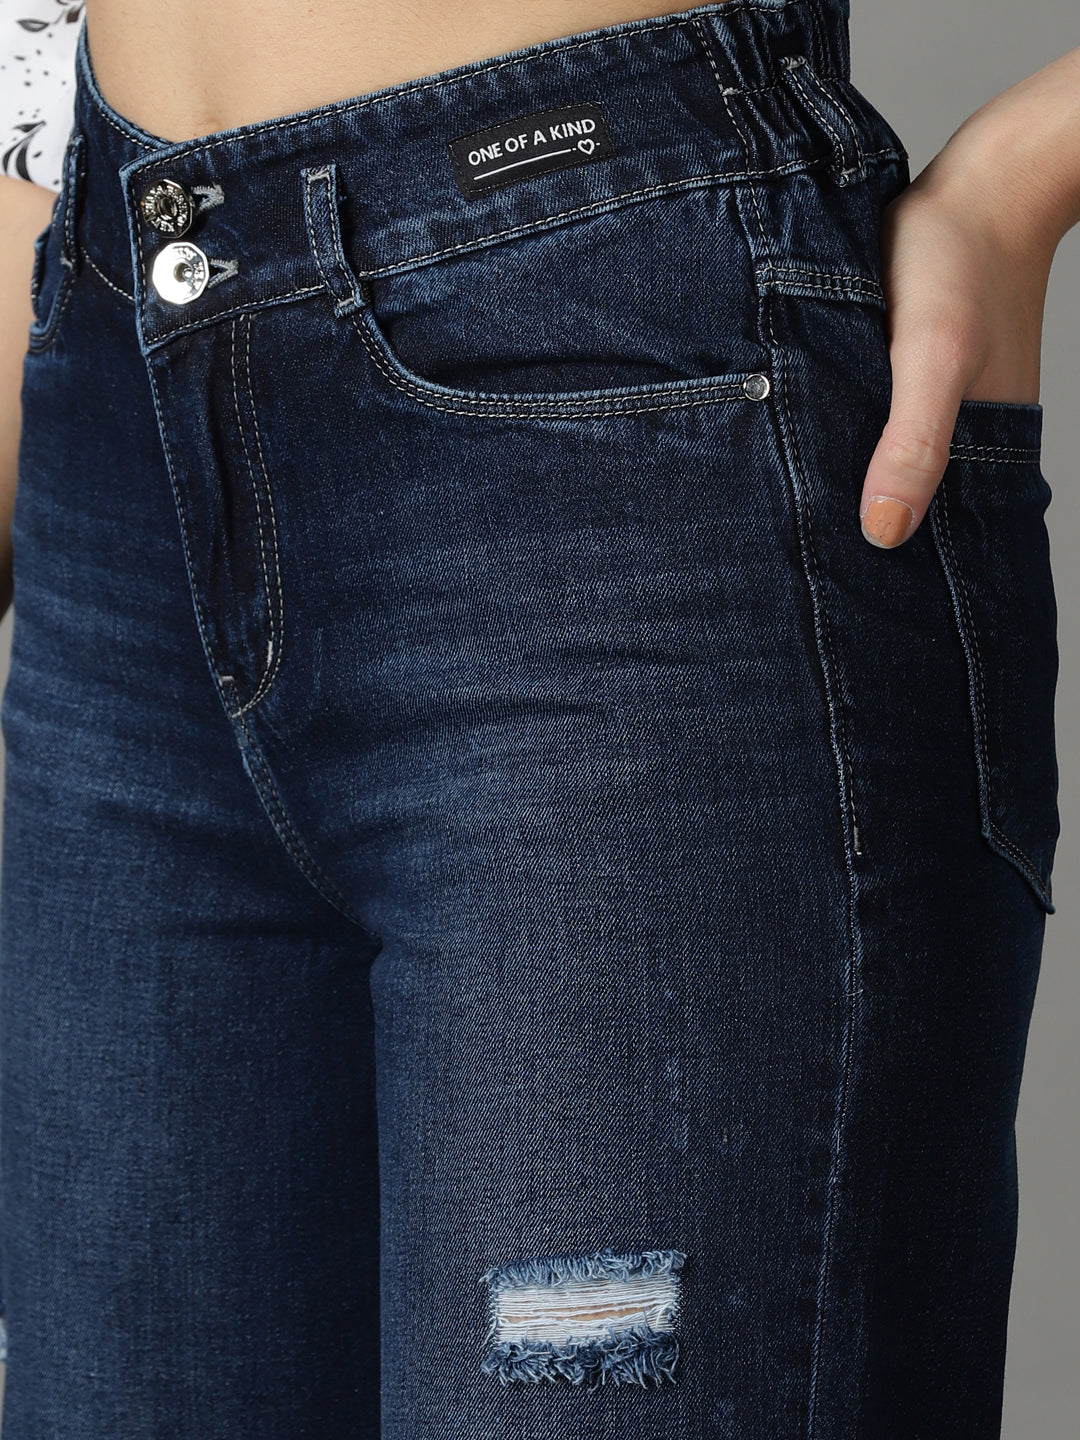 Women's Navy Blue Solid Wide Leg Denim Jeans